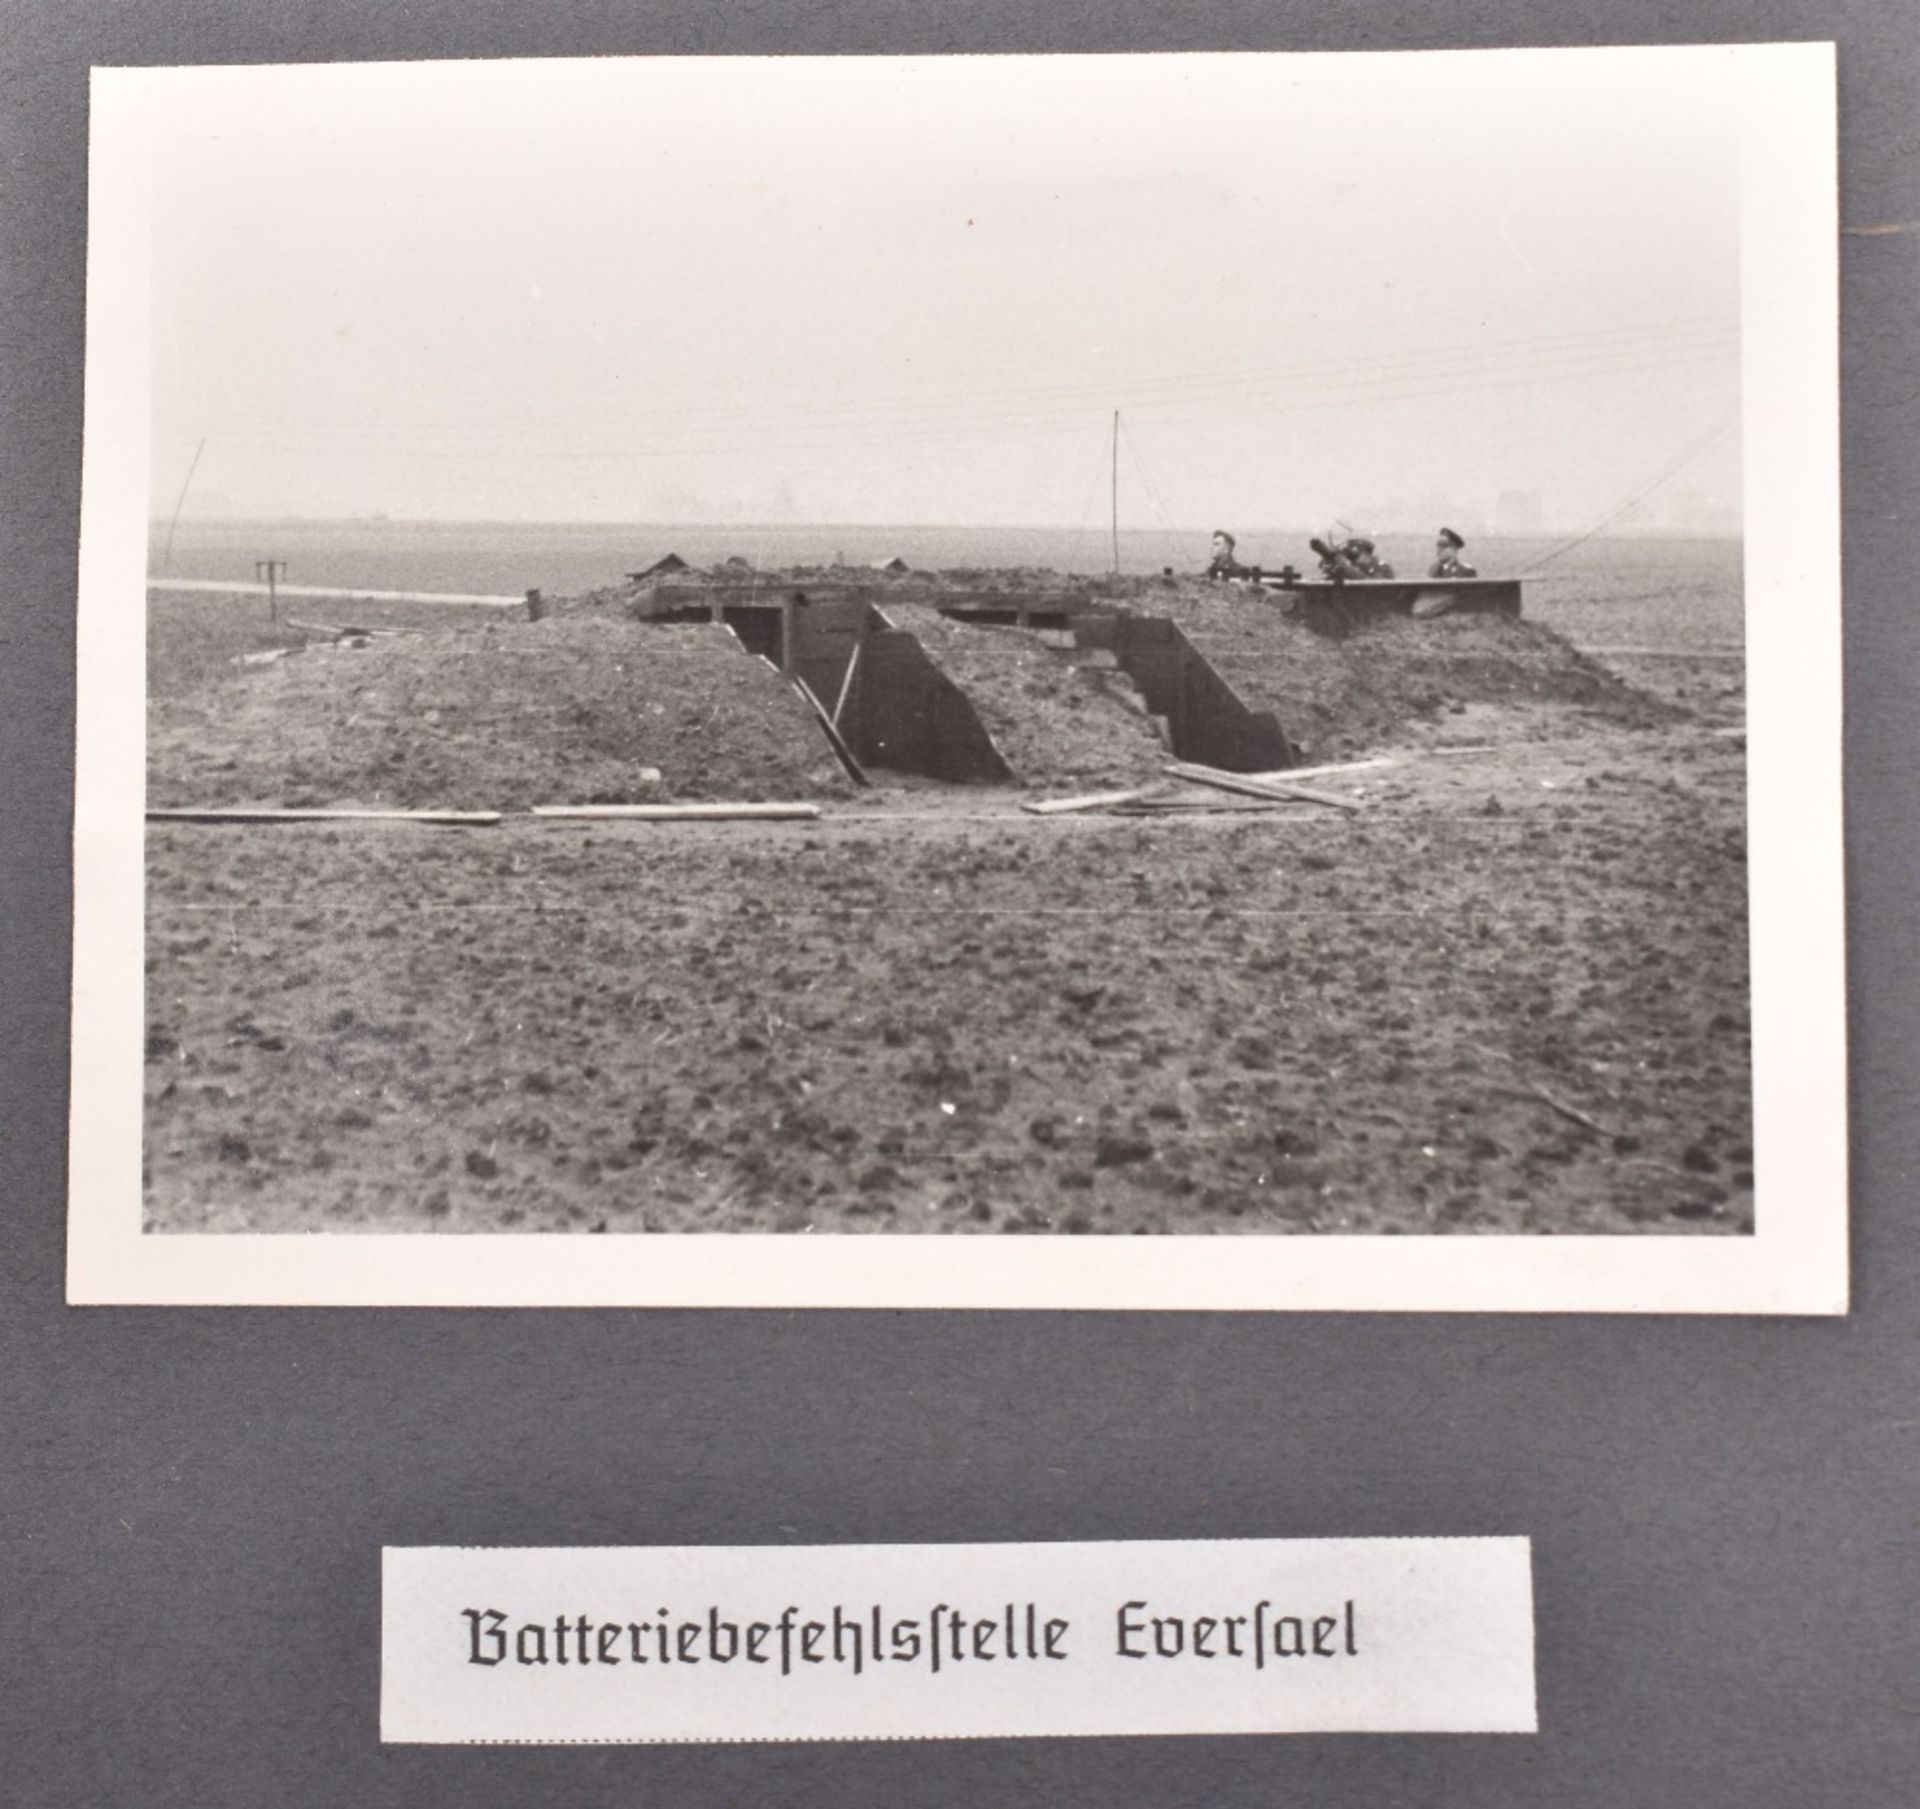 WW2 German Luftwaffe Flak Section Photograph Album - Image 4 of 10